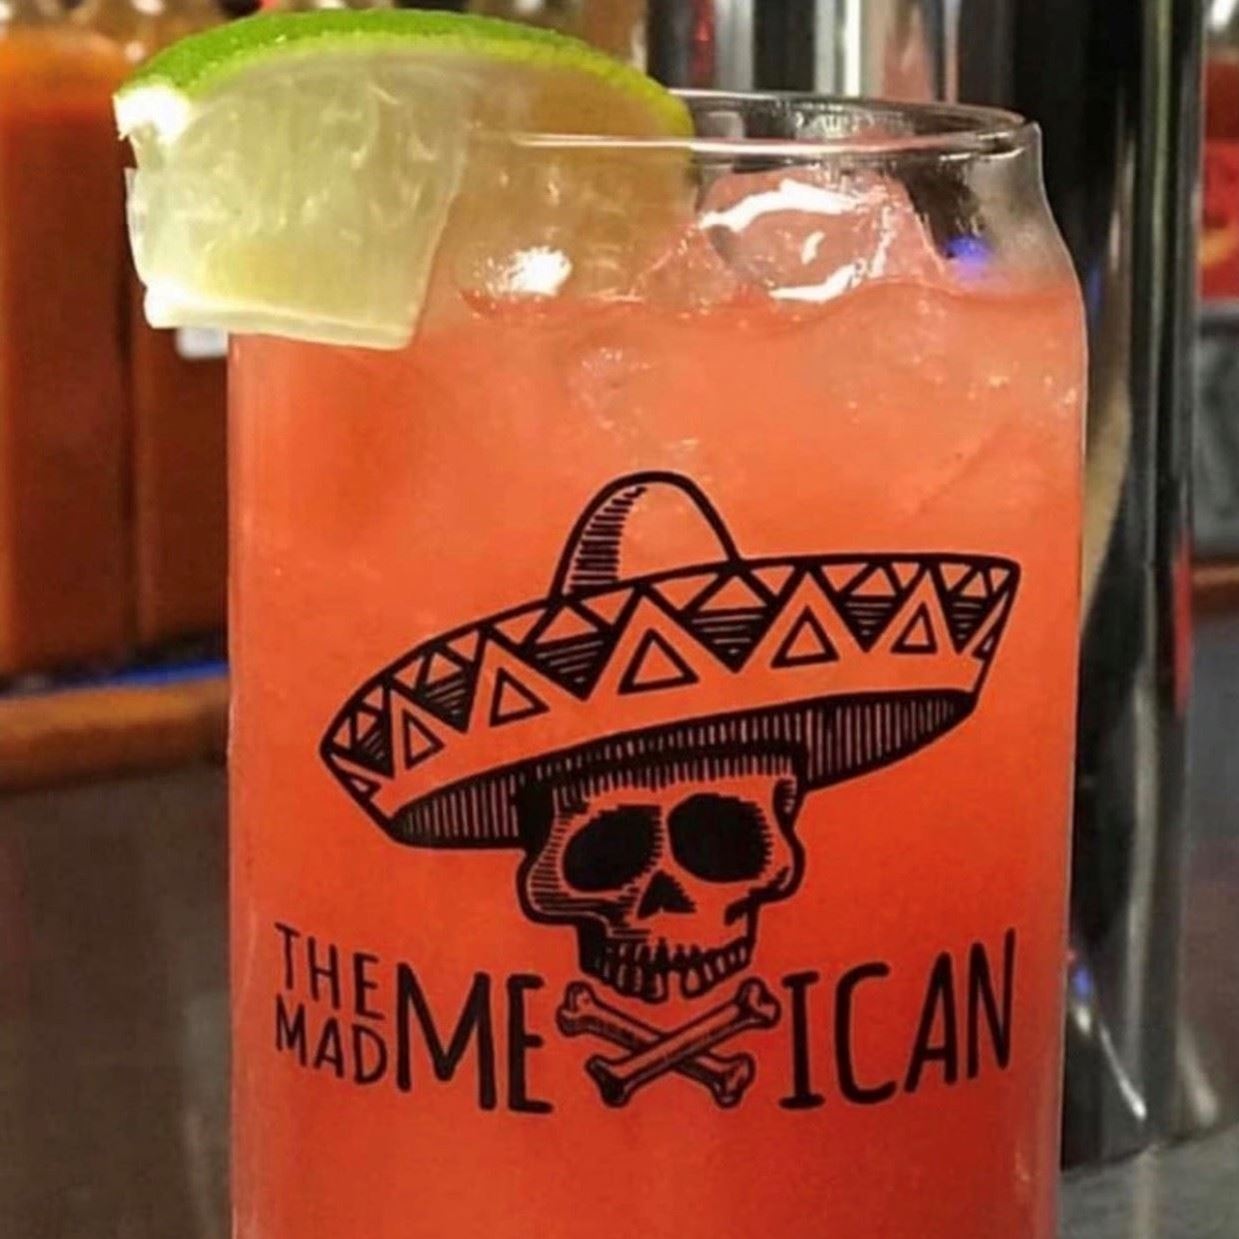 The Mad Mexican: Blood Orange Margarita